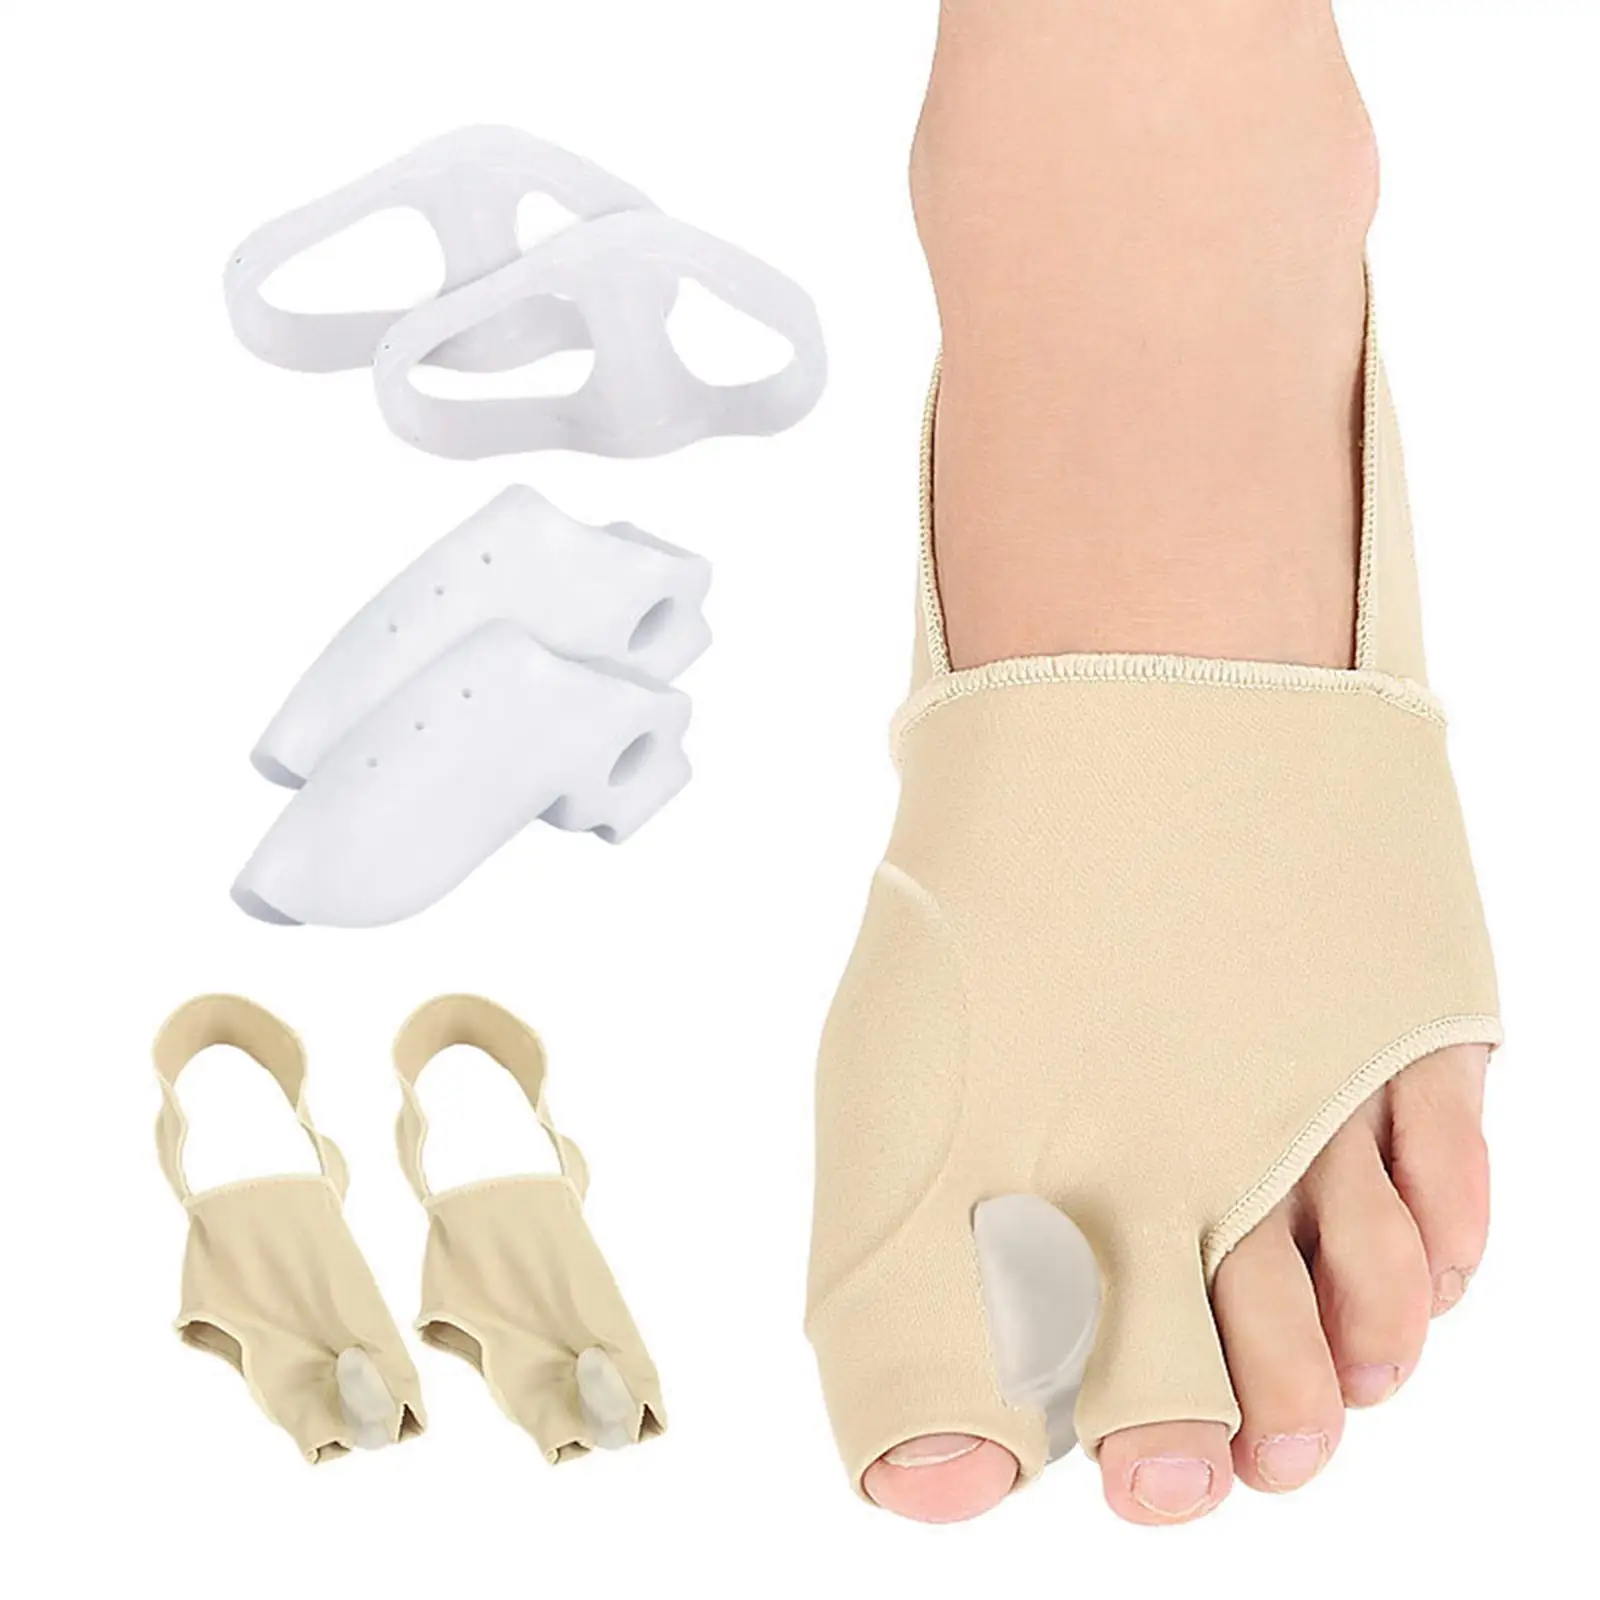 Bunion Corrector Kit Soft Bunion Guard Hallux Valgus Correction Feet Care Tool Day Night Support Orthopedic Bunion Pads Care Set